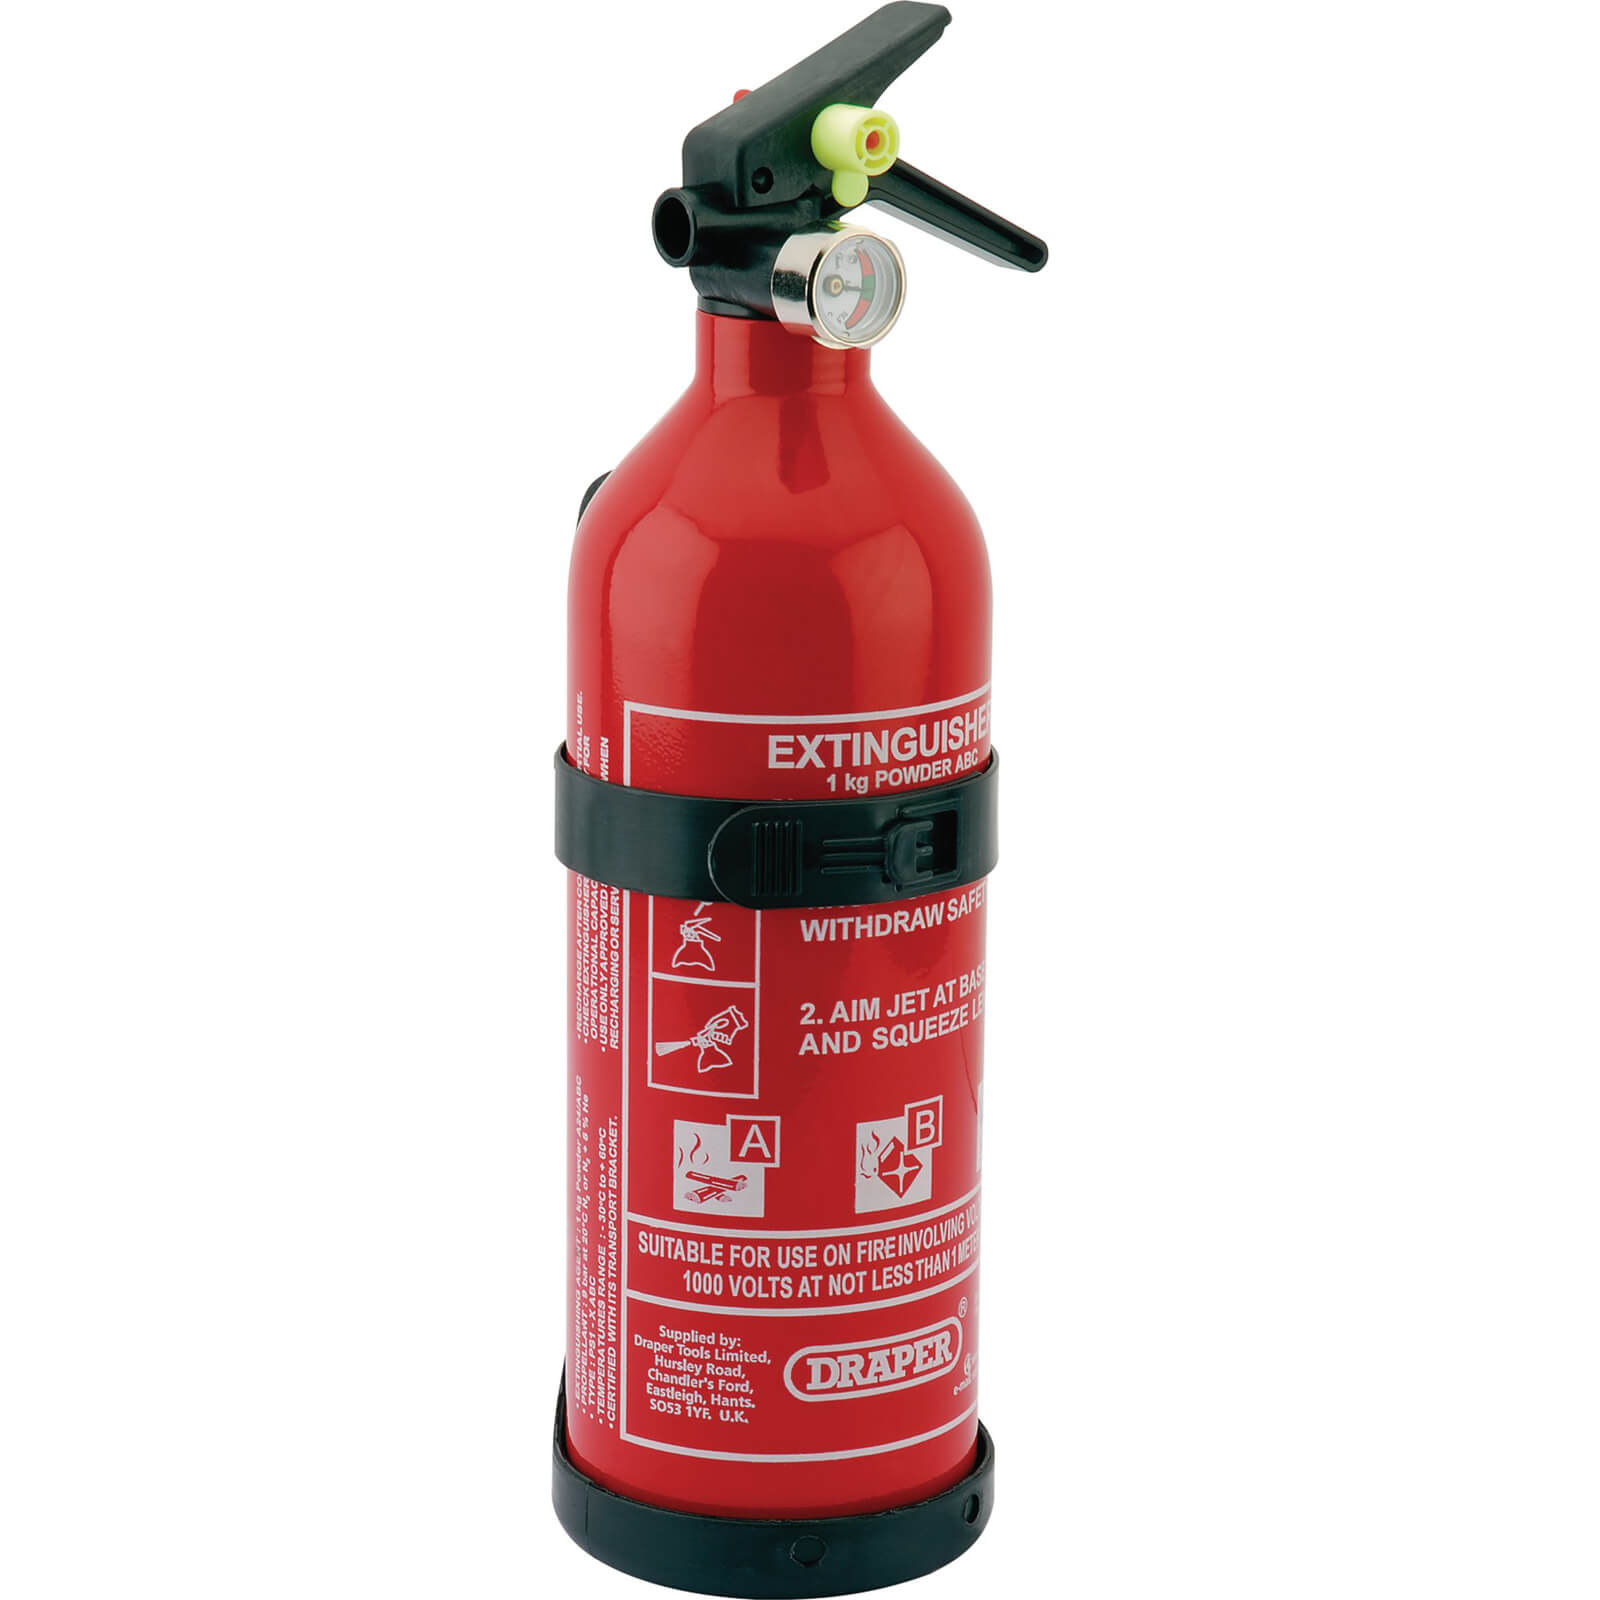 Image of Draper Dry Powder Fire Extinguisher